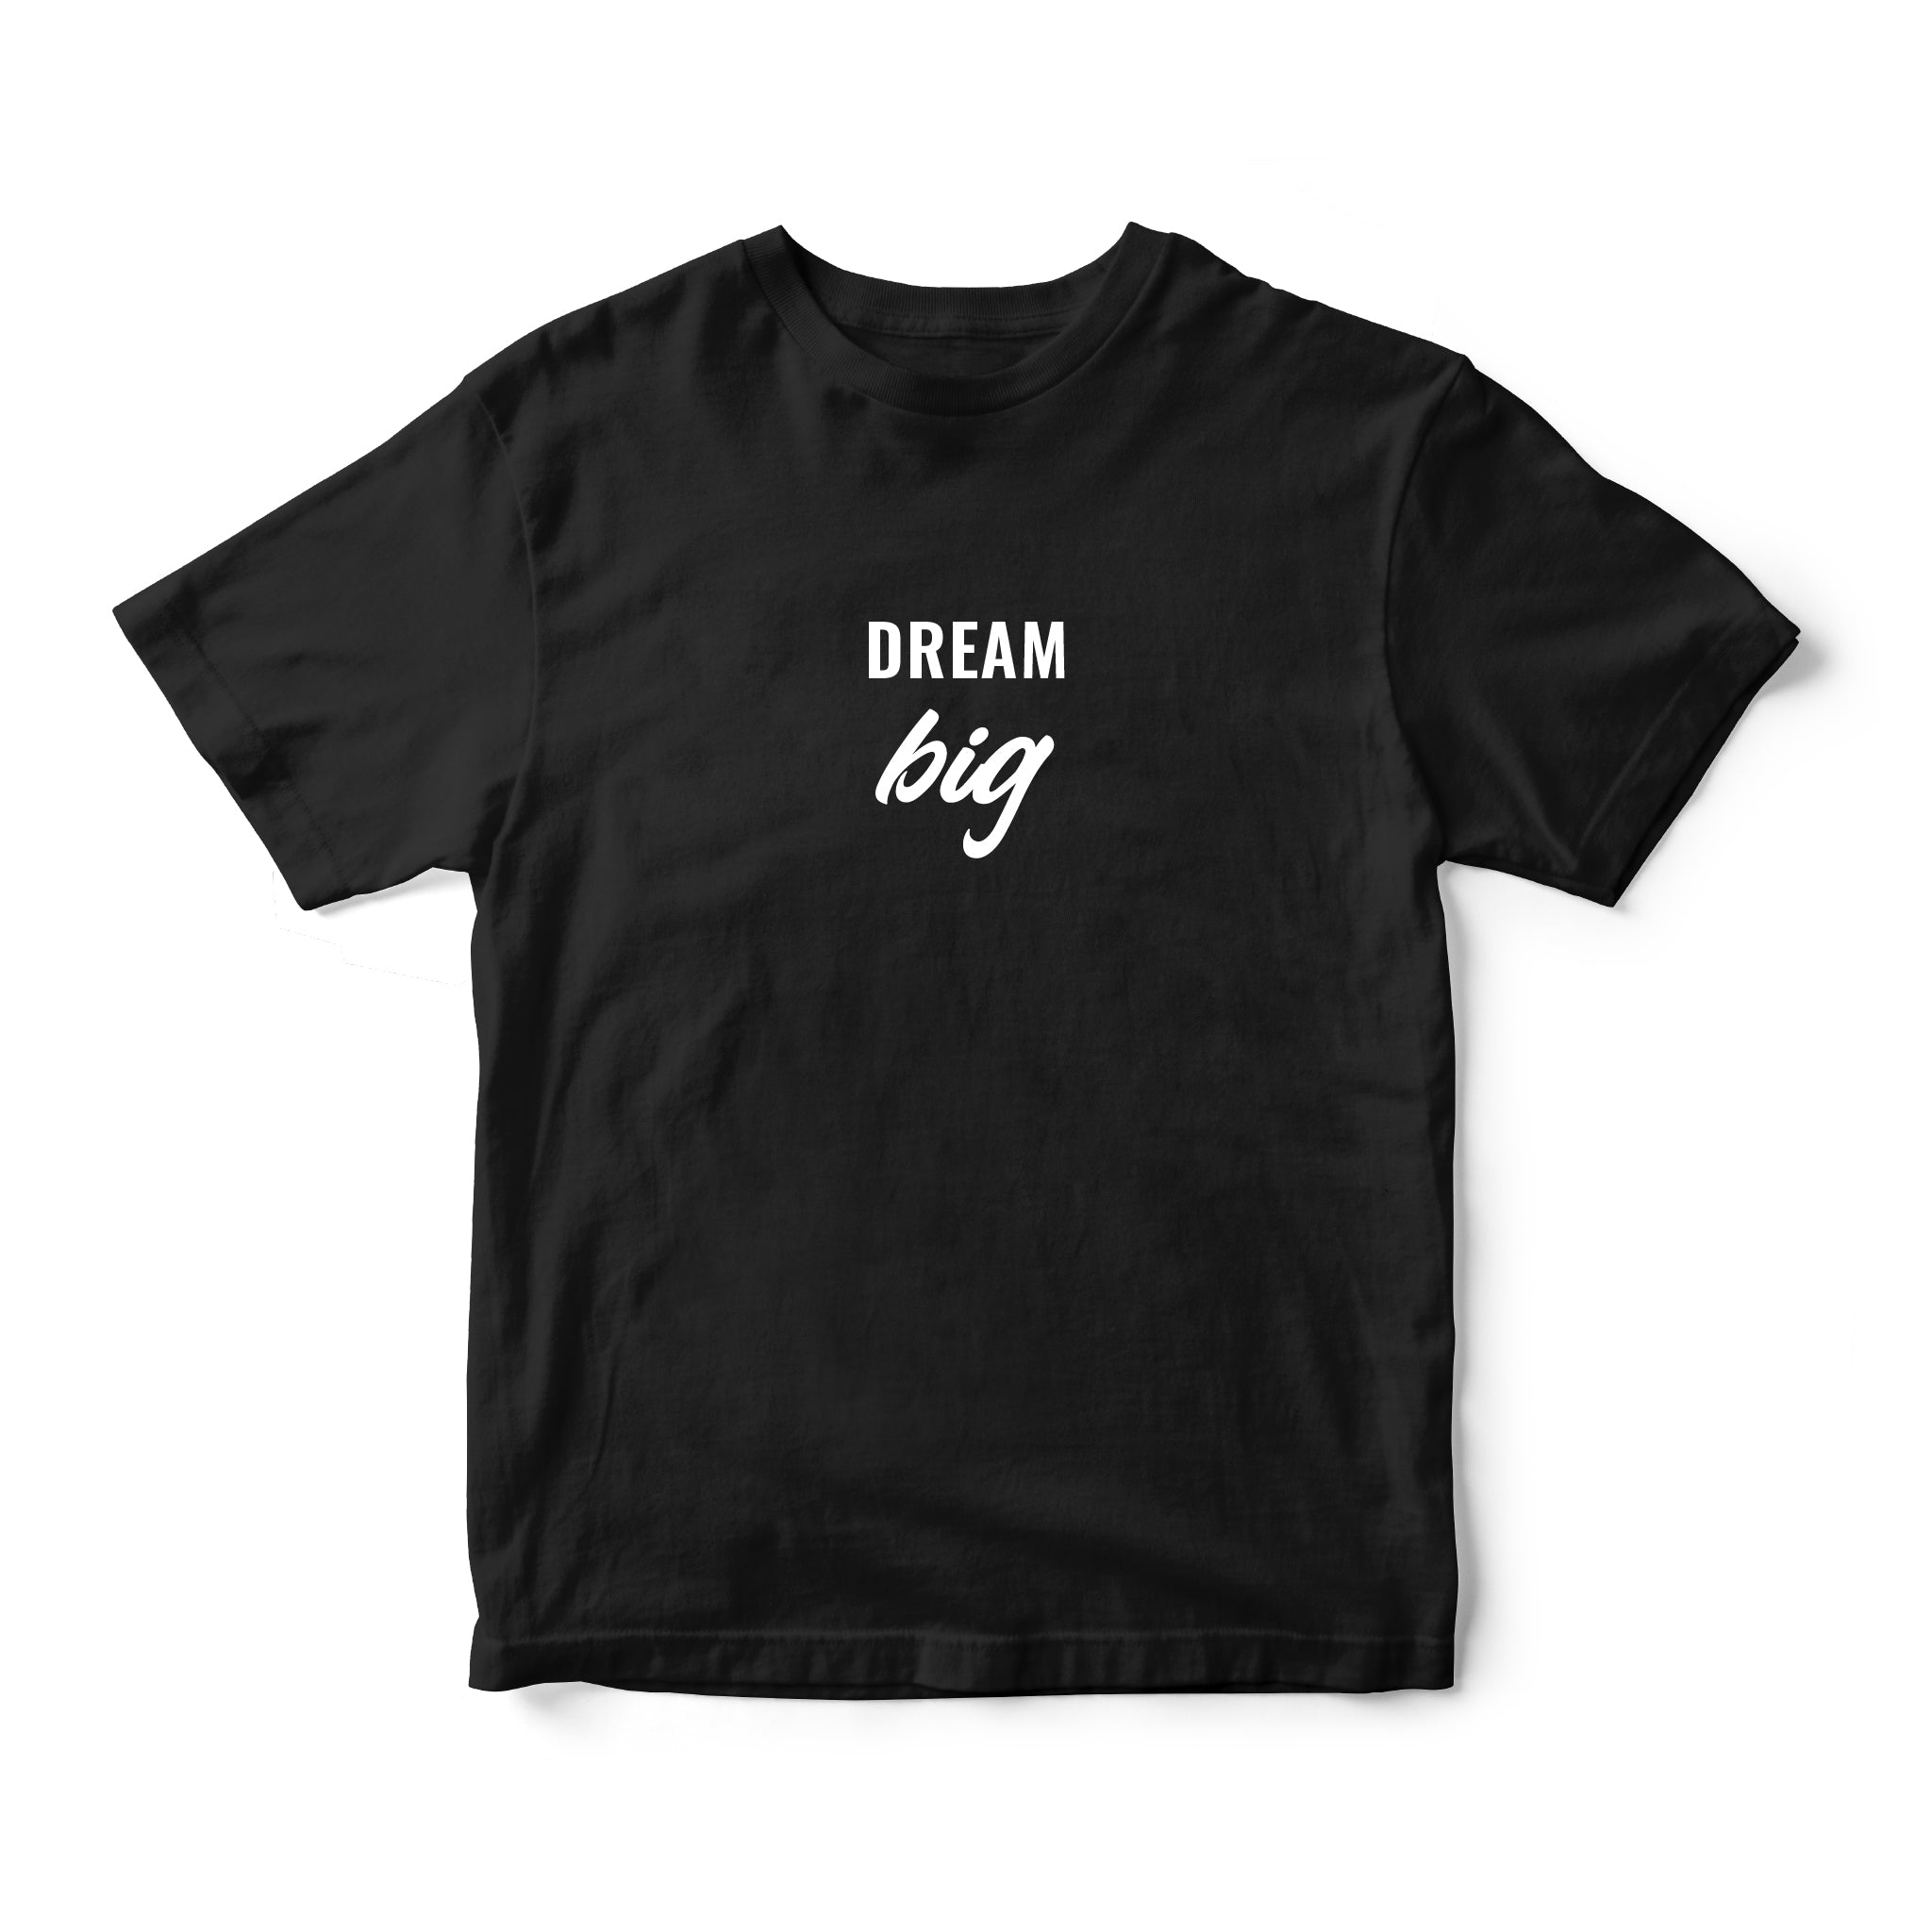 Instee Dream Big T-shirt Unisex 100% Cotton